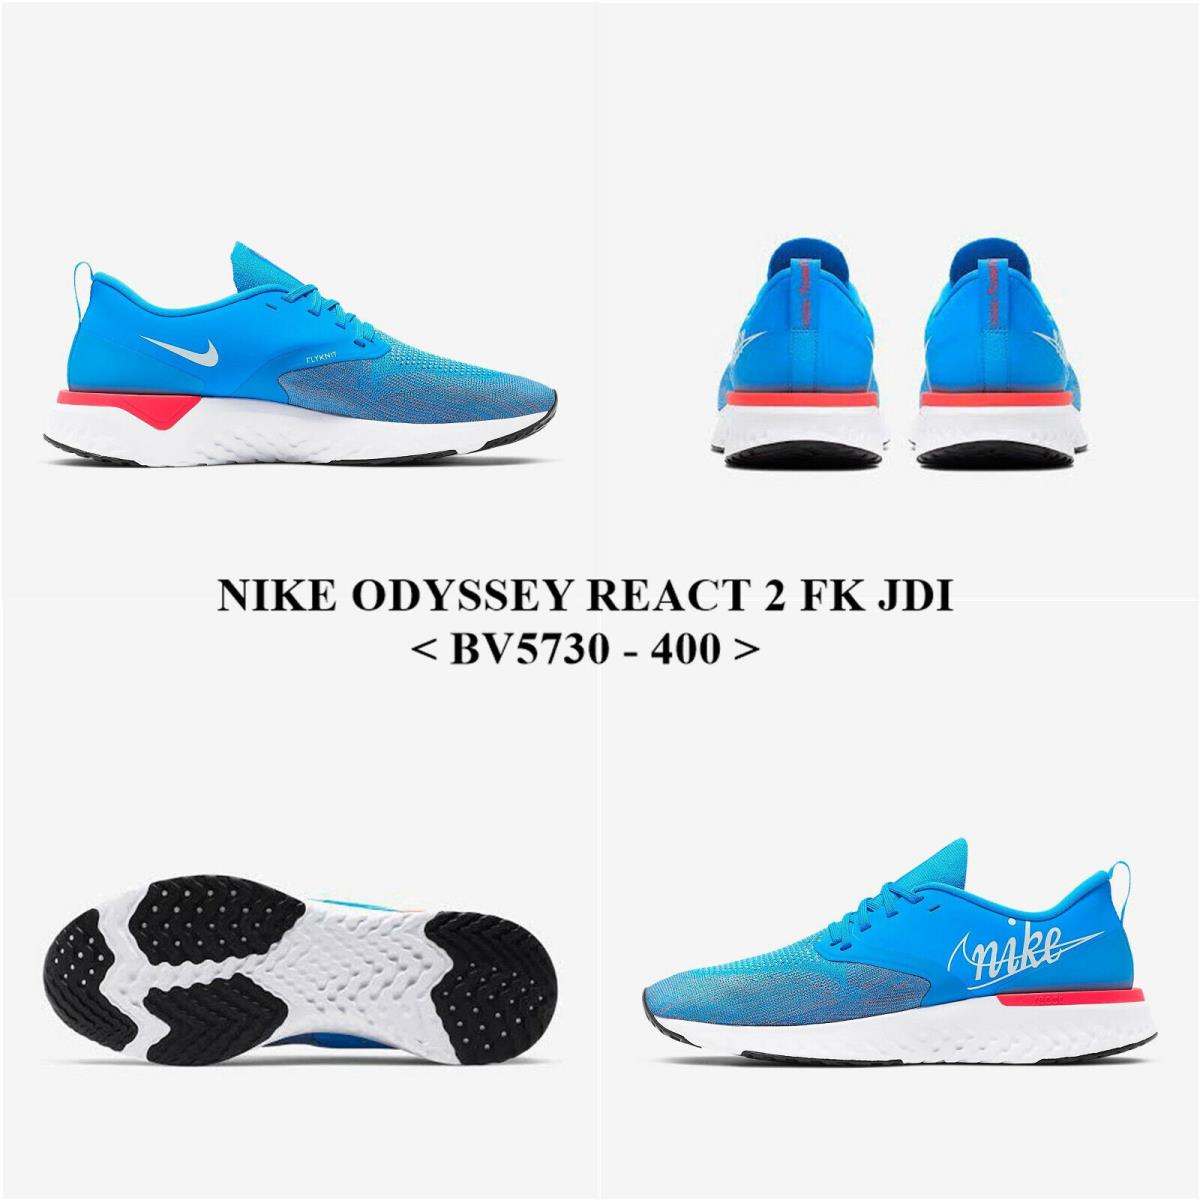 Nike Odyssey React 2 FK Jdi <BV5730 - 400> Men`s Running Shoes.new with Box